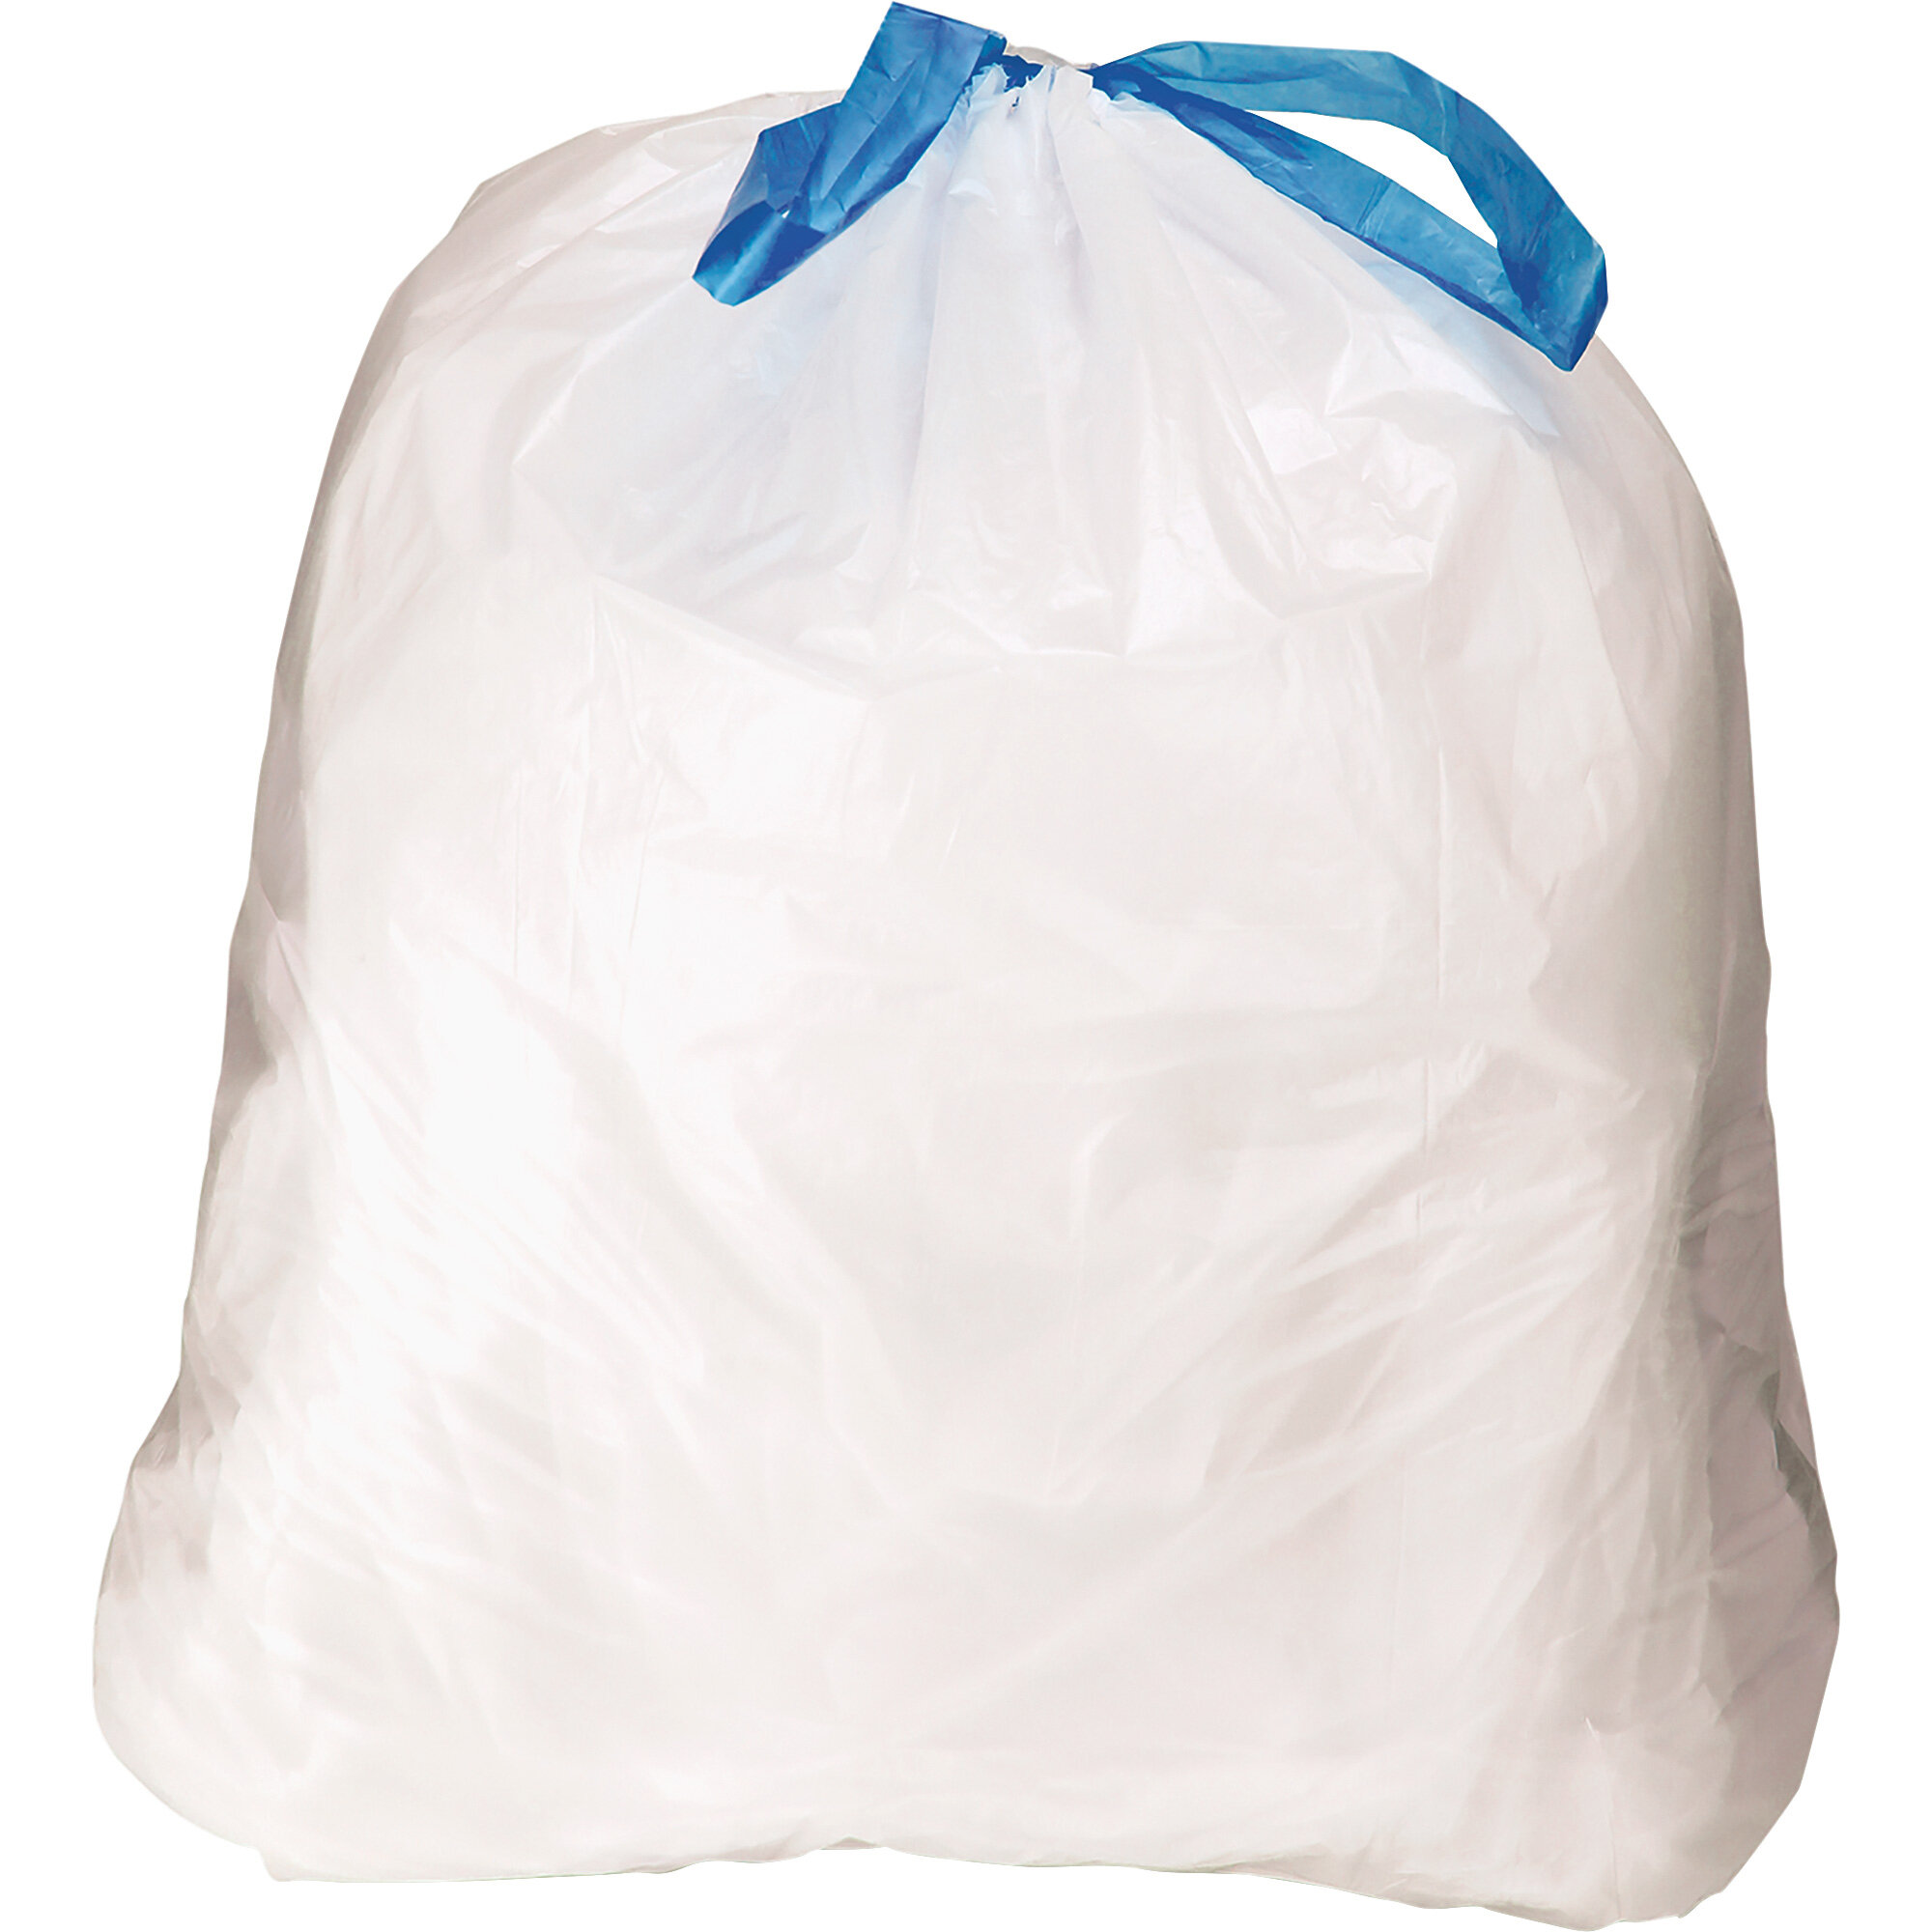 Inbox Zero 13 Gallons Plastic Trash Bags - 80 Count